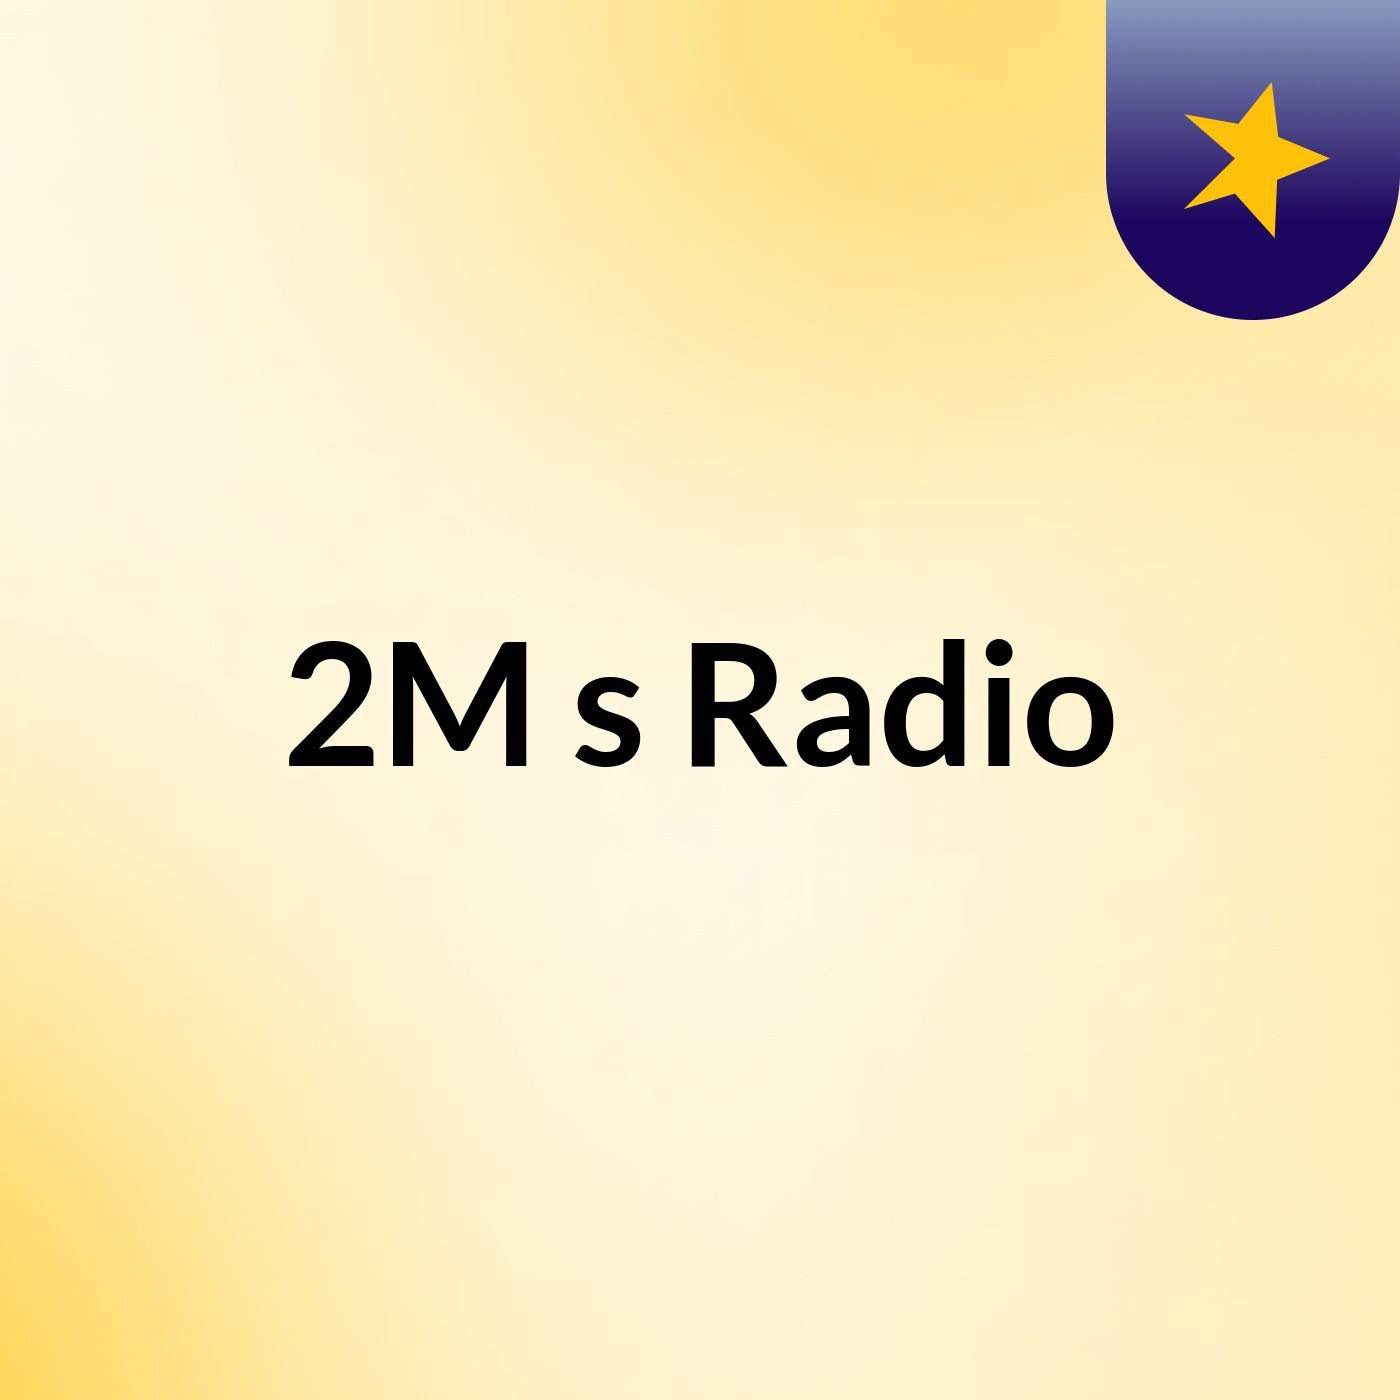 2M's Radio